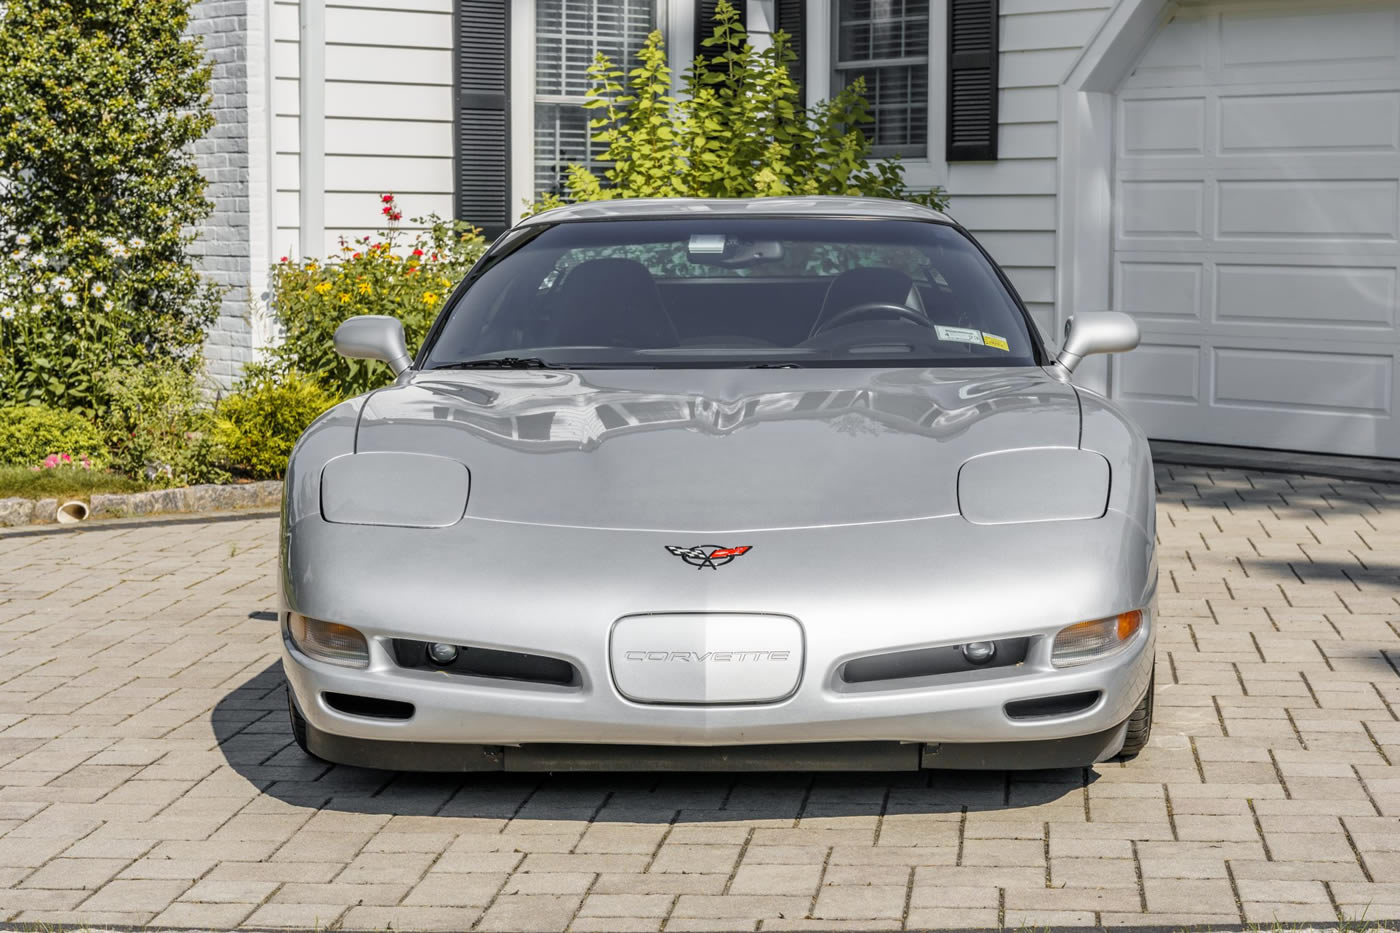 2001 Corvette Coupe in Quicksilver Metallic